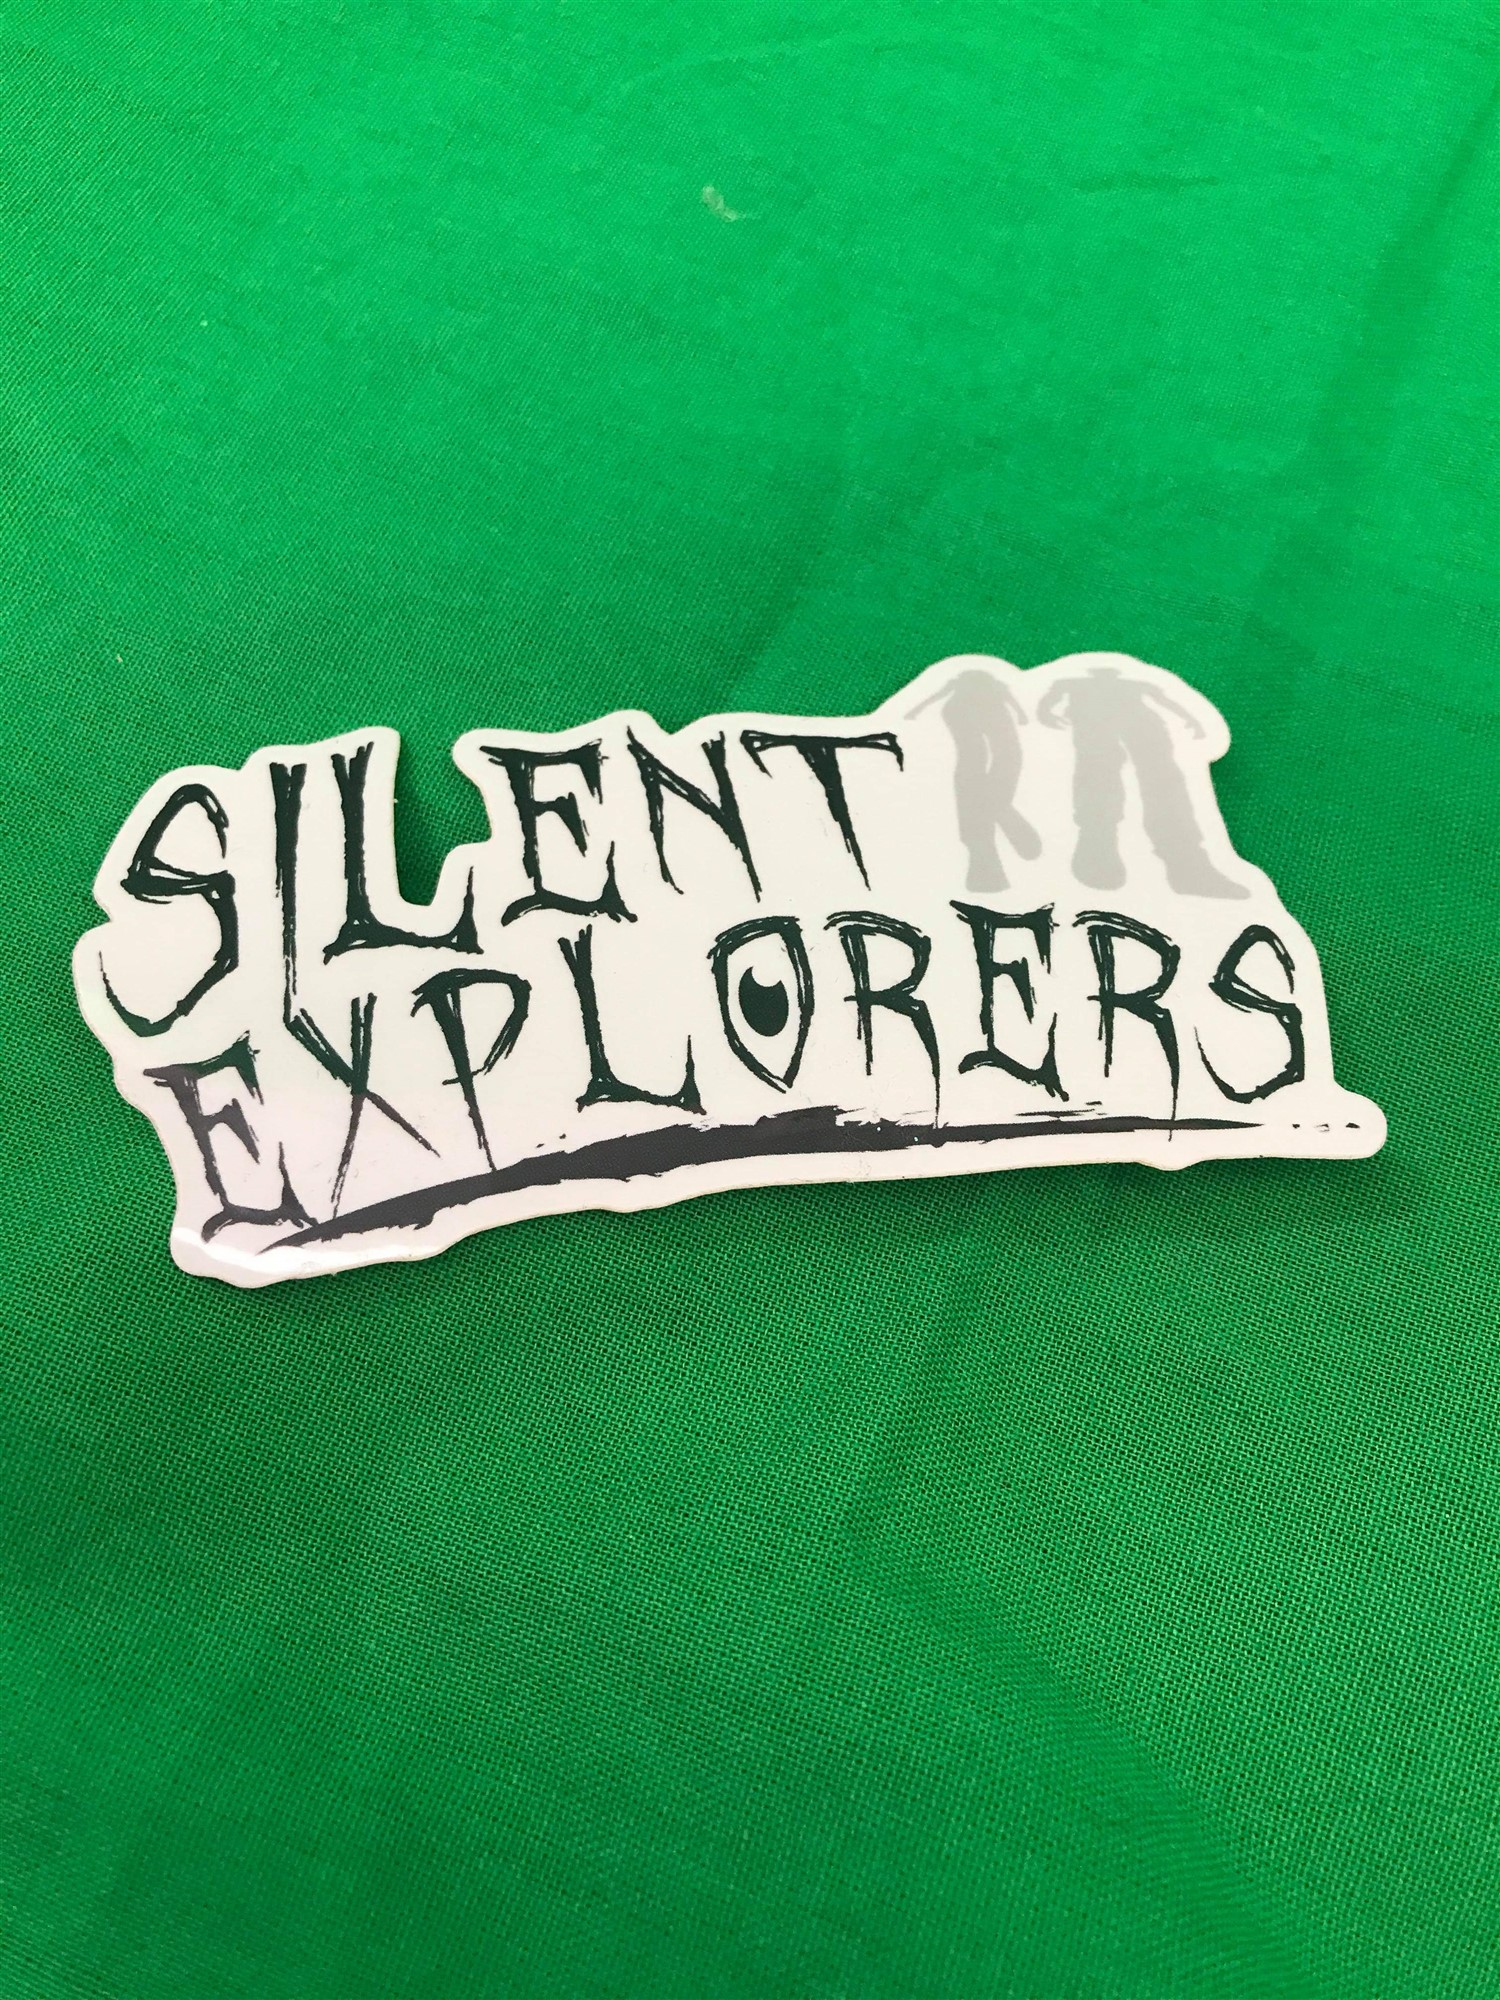 Silent Explorers Clear Sticker